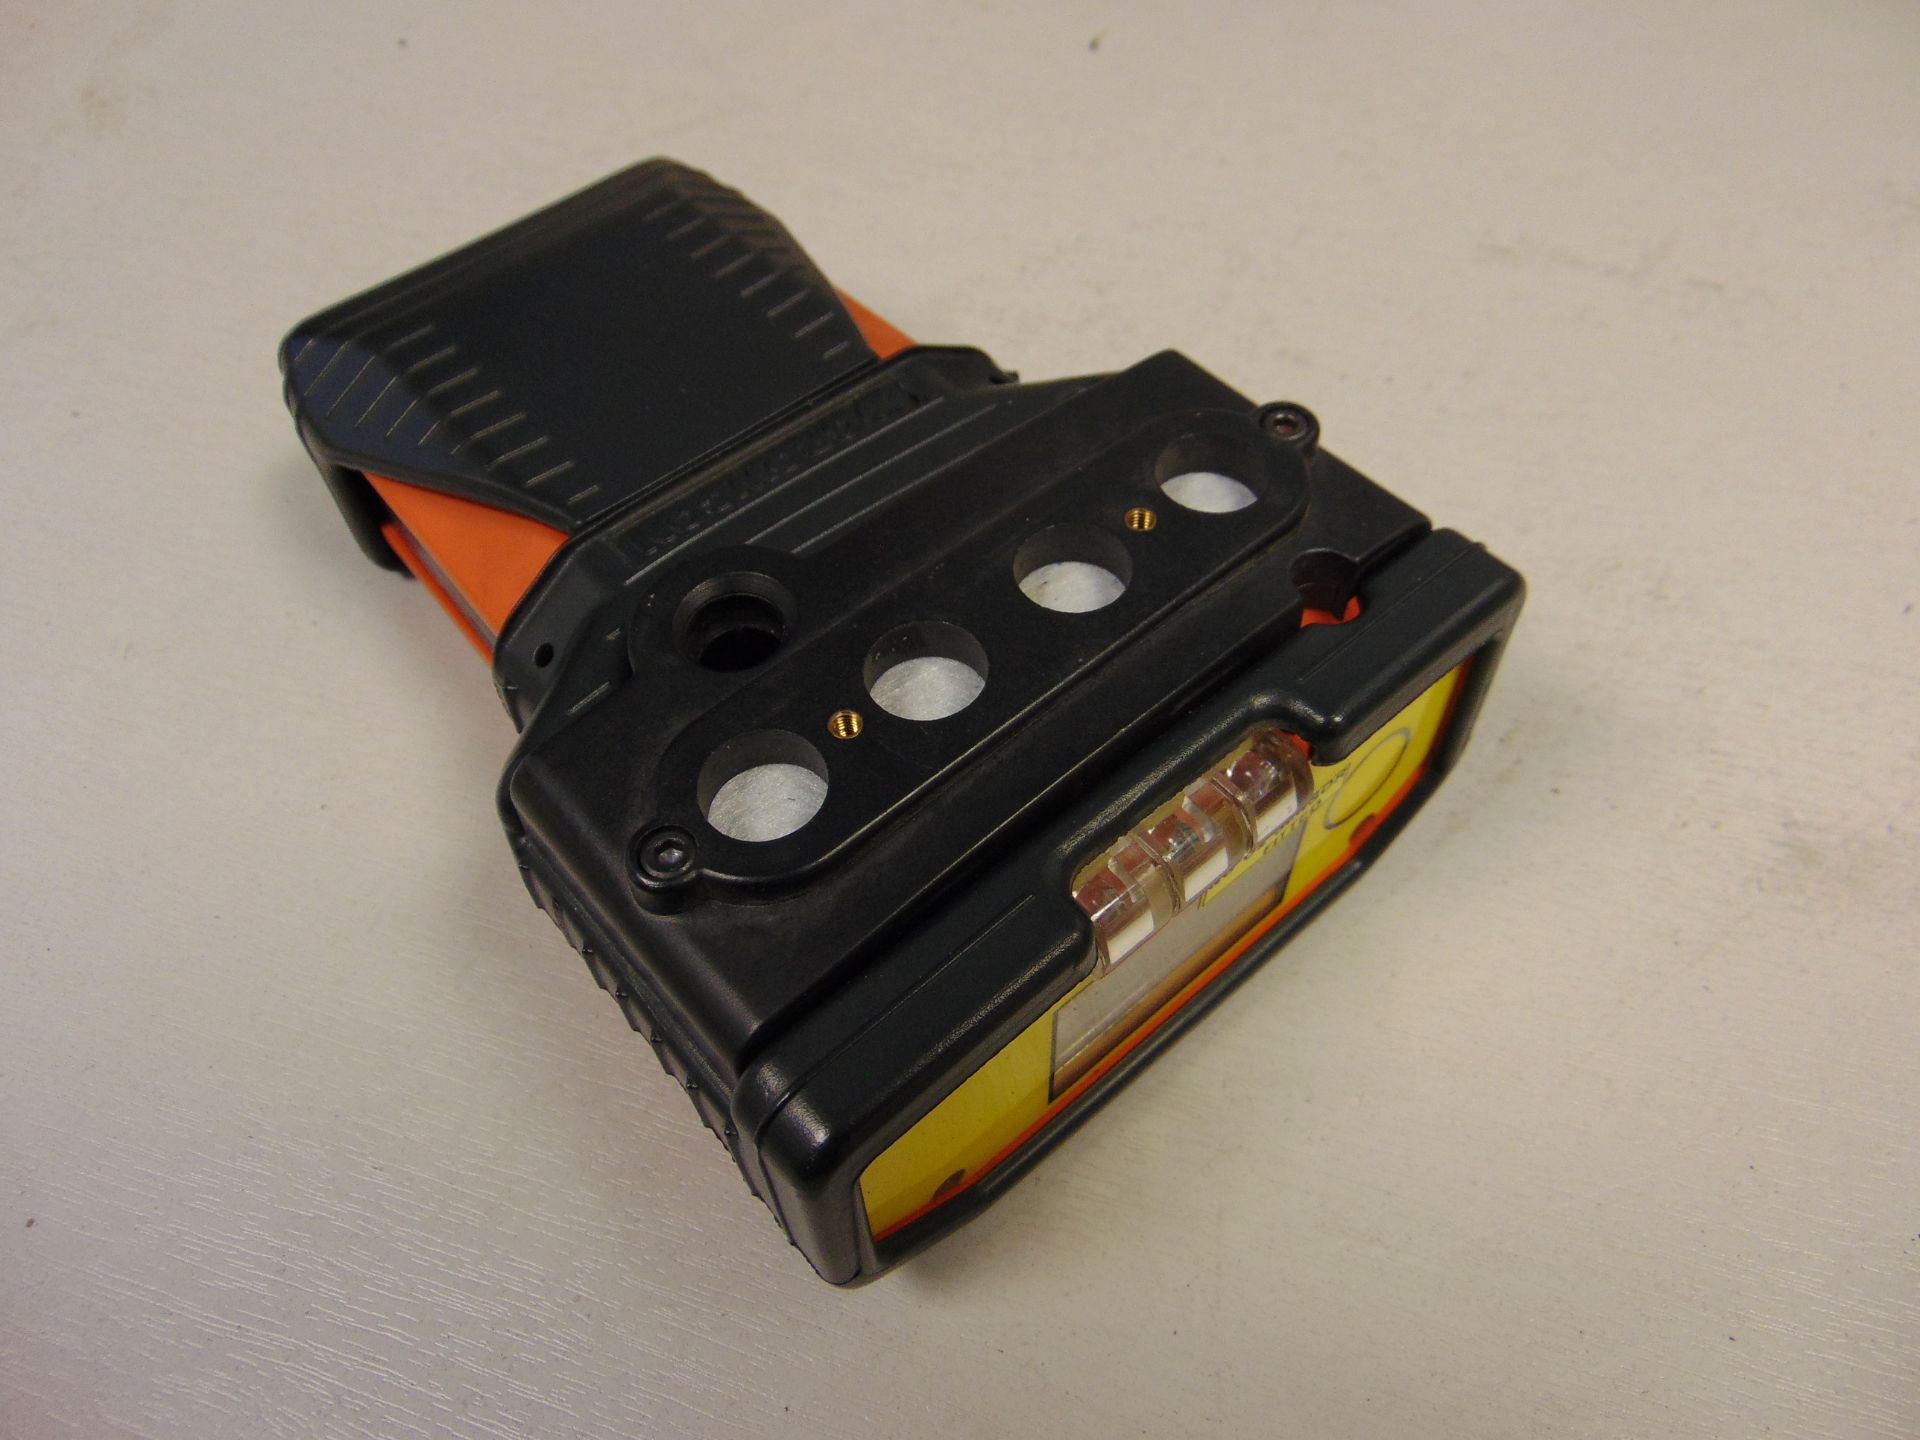 Crowcon Custodian CDL Portable Gas Monitor Kit - Image 3 of 5